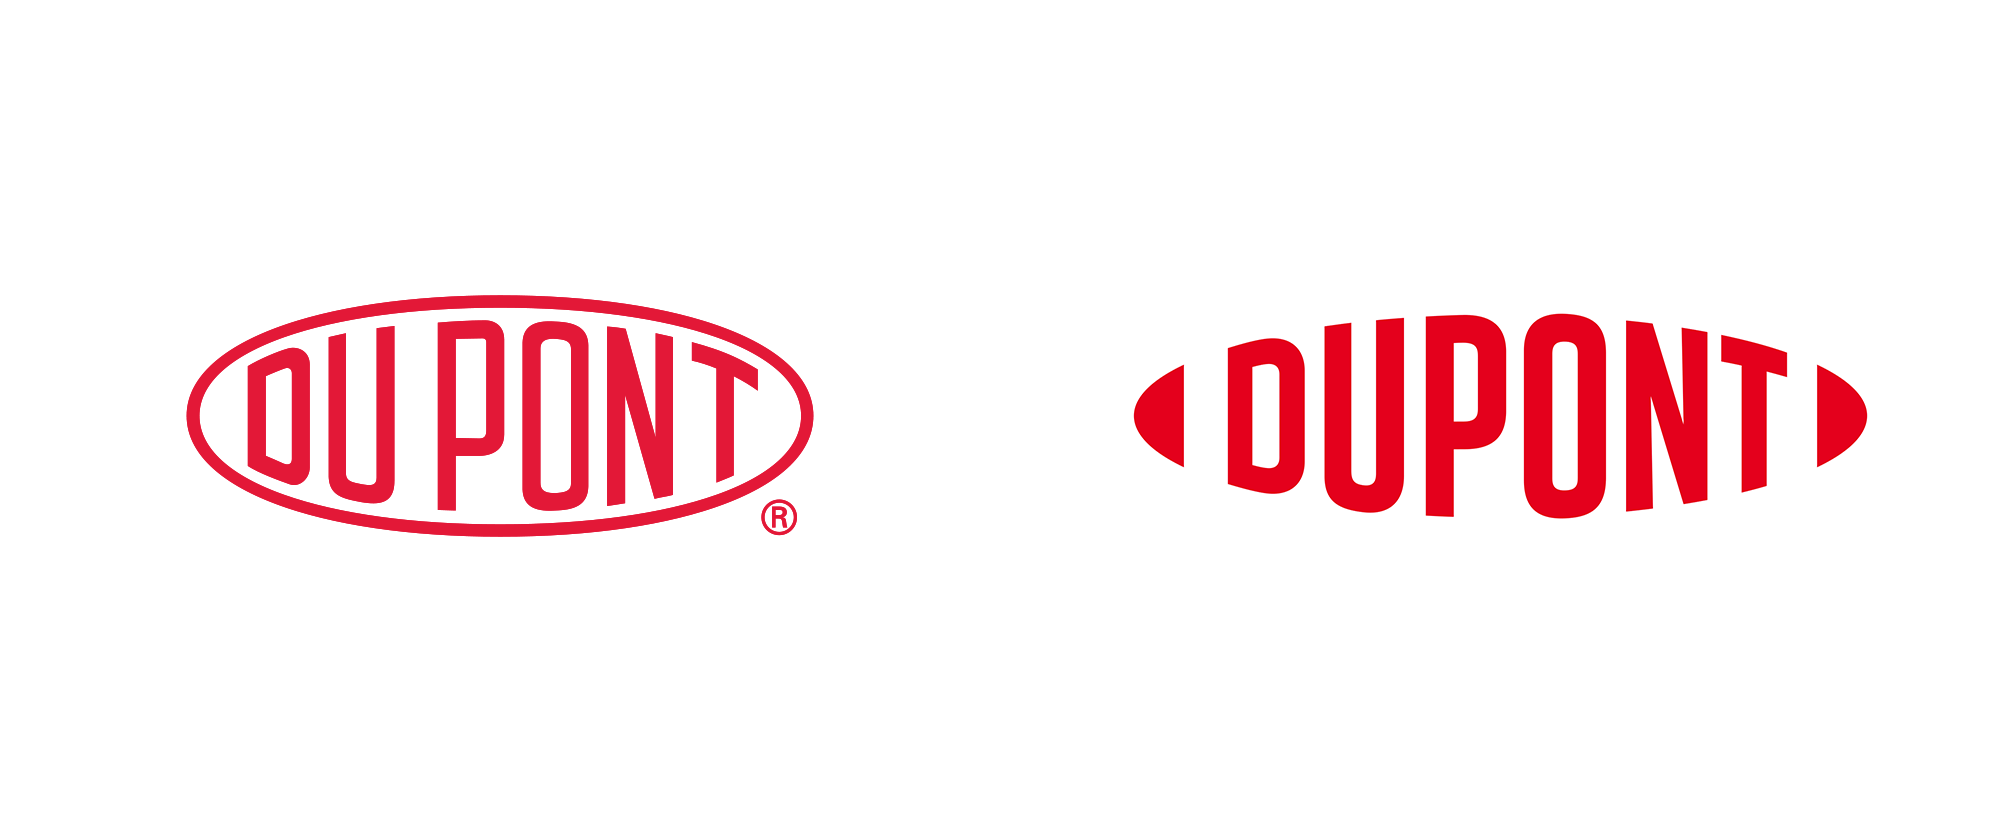 Brand New Logo - Brand New